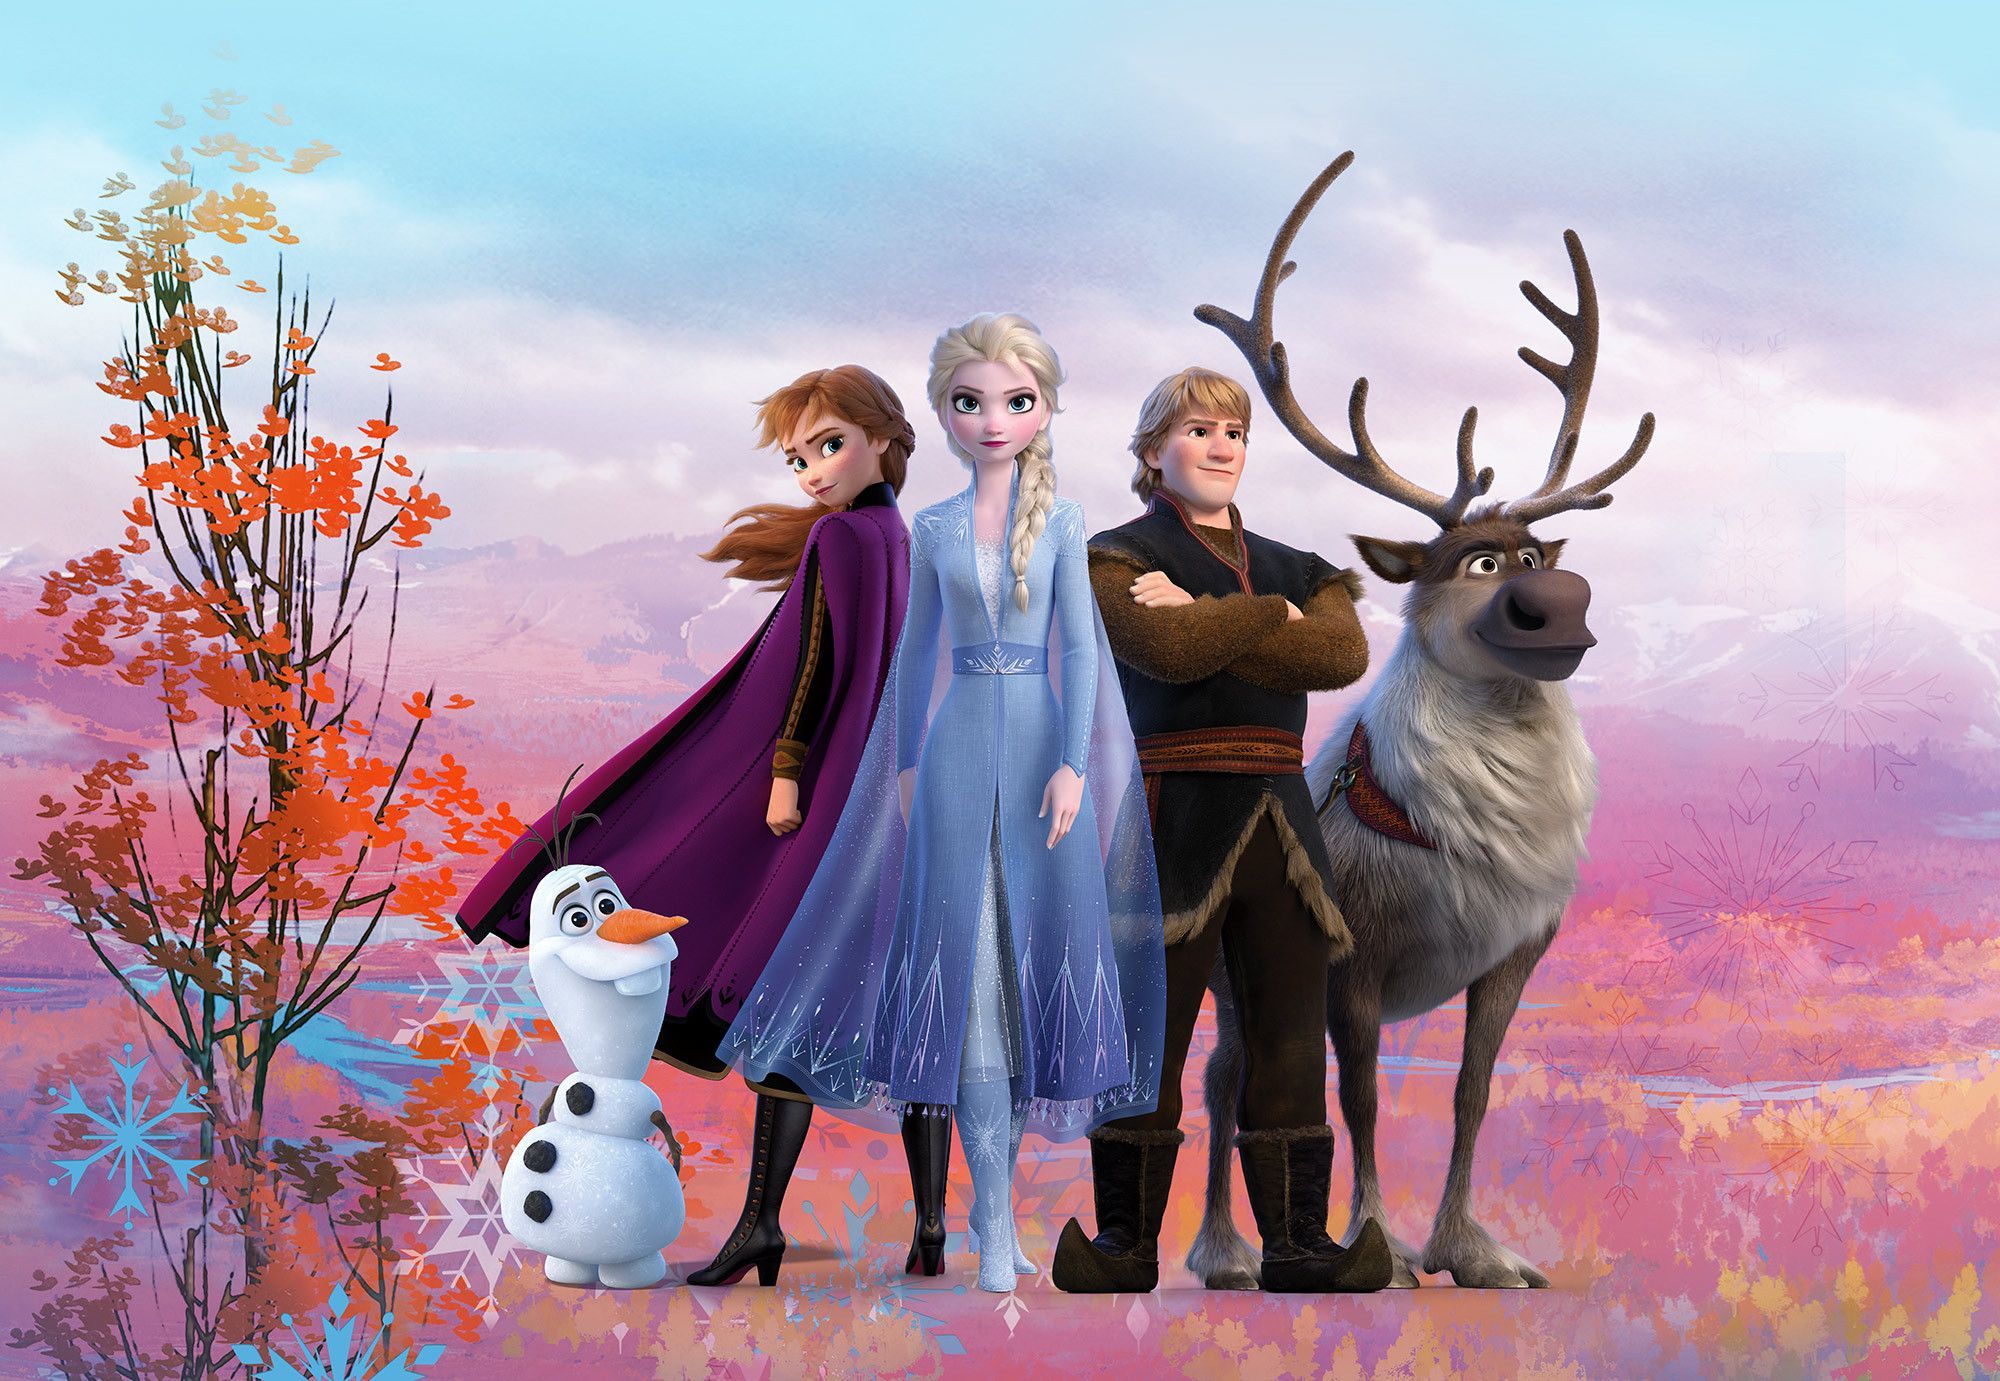 Children's bedroom wallpaper mural Frozen 2 Elsa Anna Disney big poster + GLUE